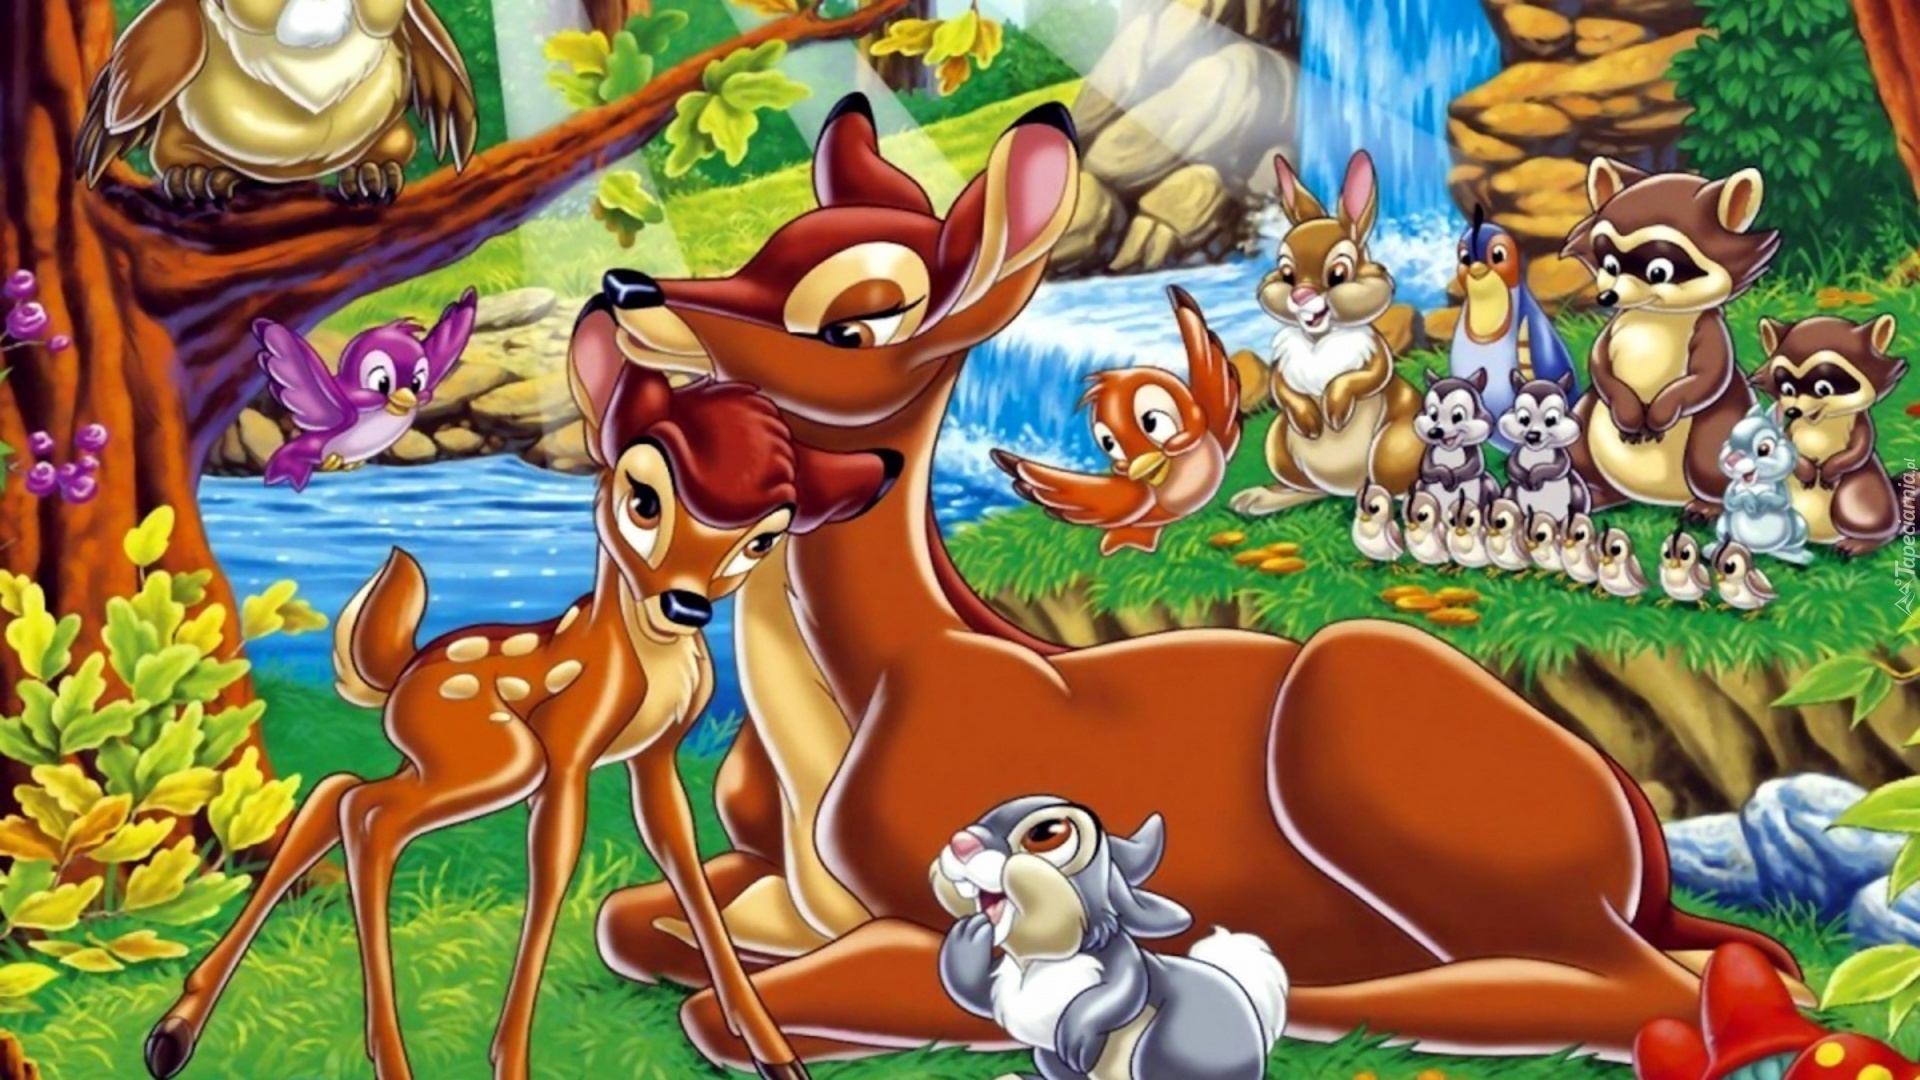 Bambi, Disney